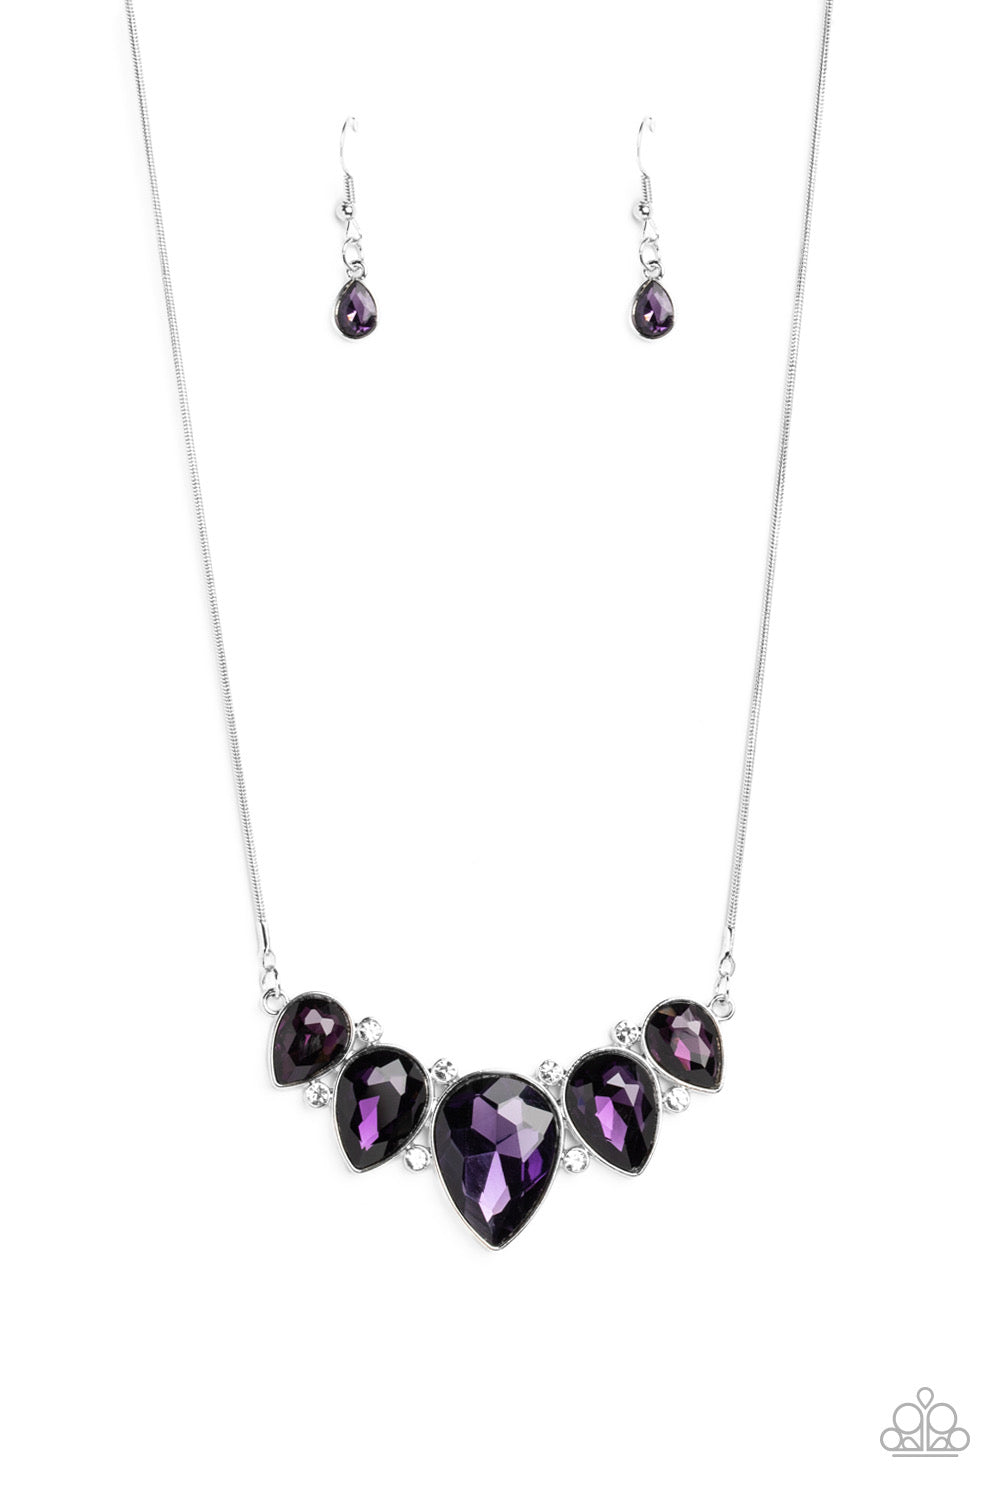 Purple Pendant Set - Pendant Set for Women - Birthday Gift for Girls -  Cherry Purple Crystal Pendant Necklace Set by Blingvine